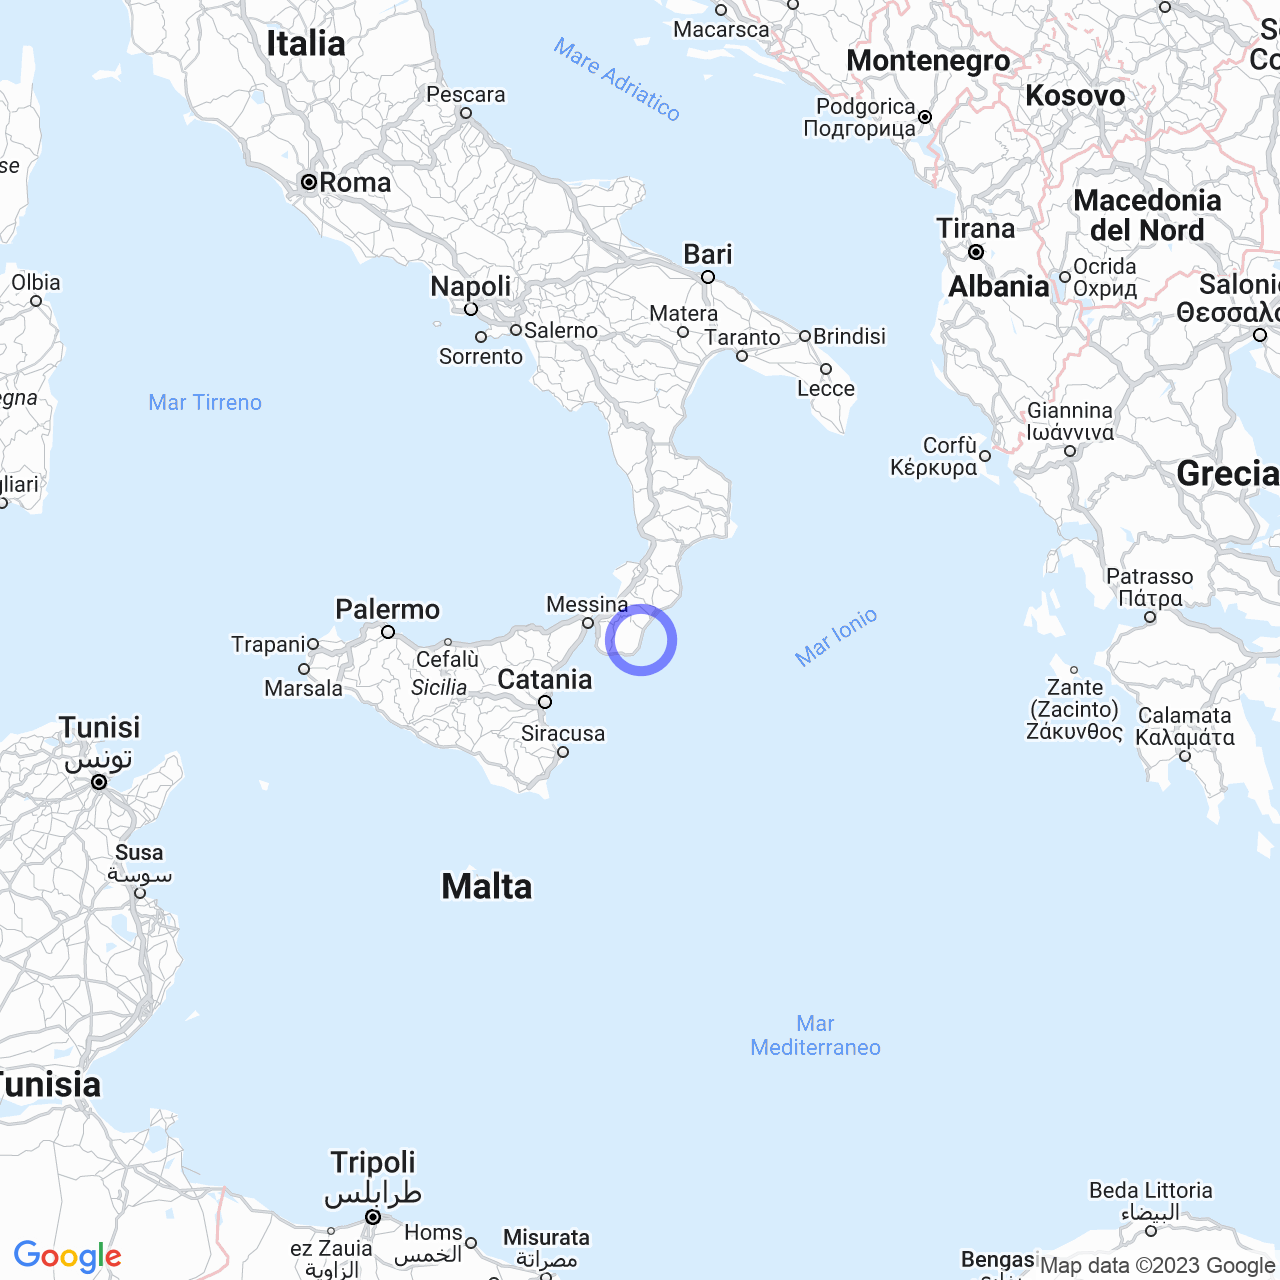 The province of Reggio Calabria: territory and municipalities.